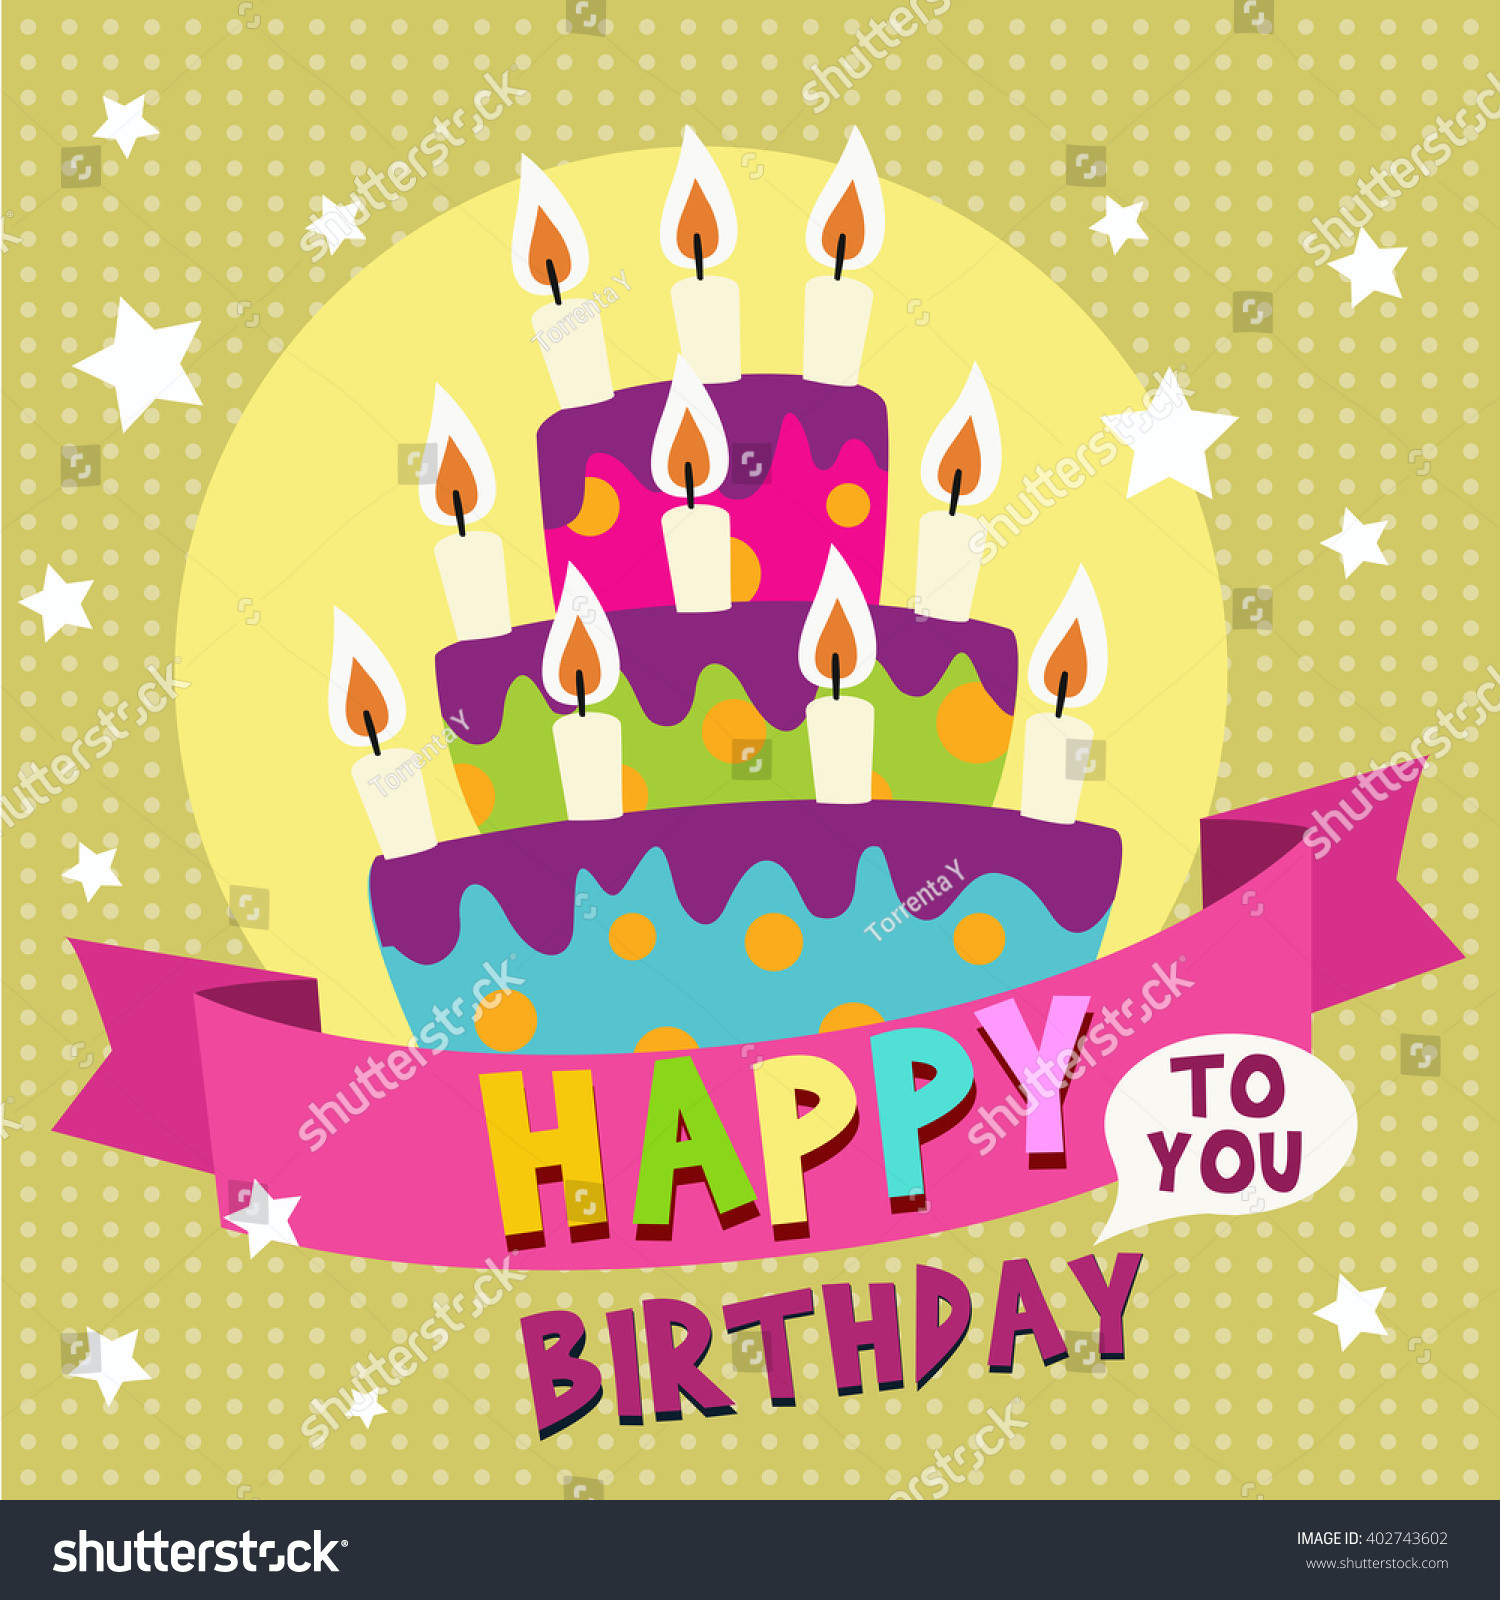 Best ideas about Happy Birthday Card Design
. Save or Pin Happy Birthday Card Design Template With Image Birthday Now.